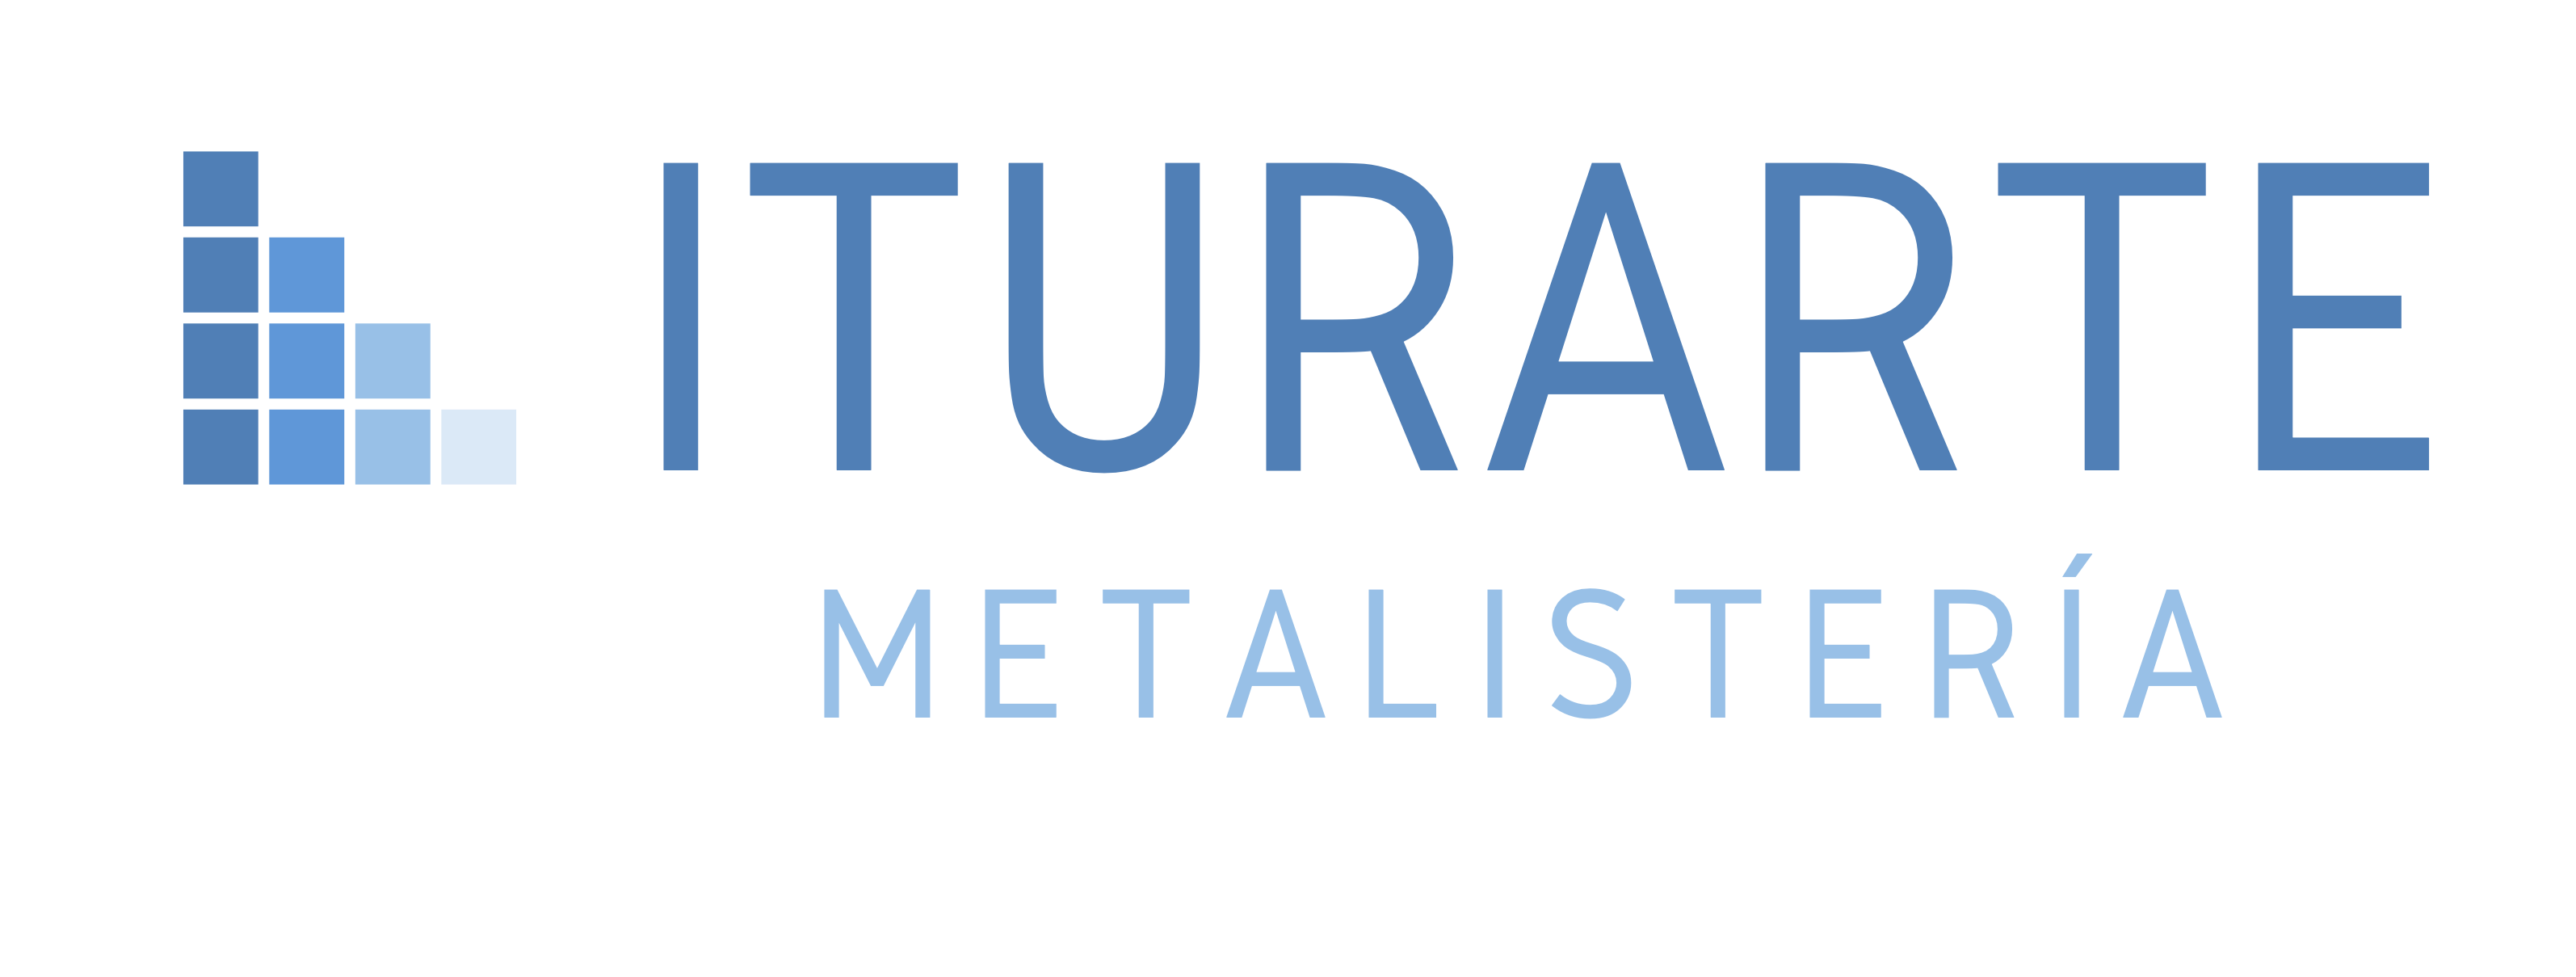 Iturarte Metalisteria Logo